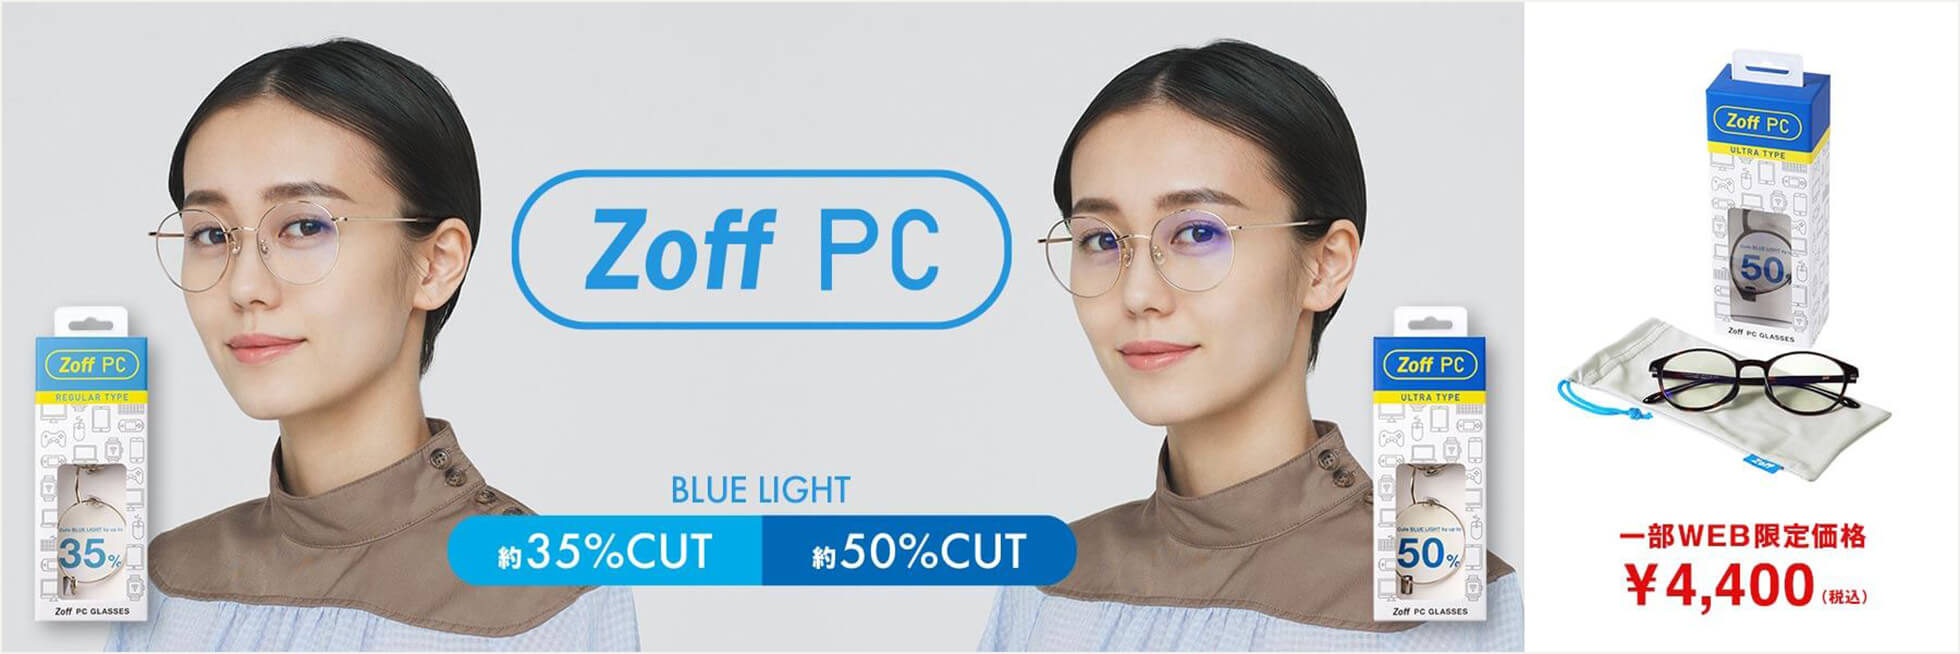 Zoff PC BLUE LIGHT 約35%CUT 約50%CUT 一部WEB限定価格 ¥4,400(税込)